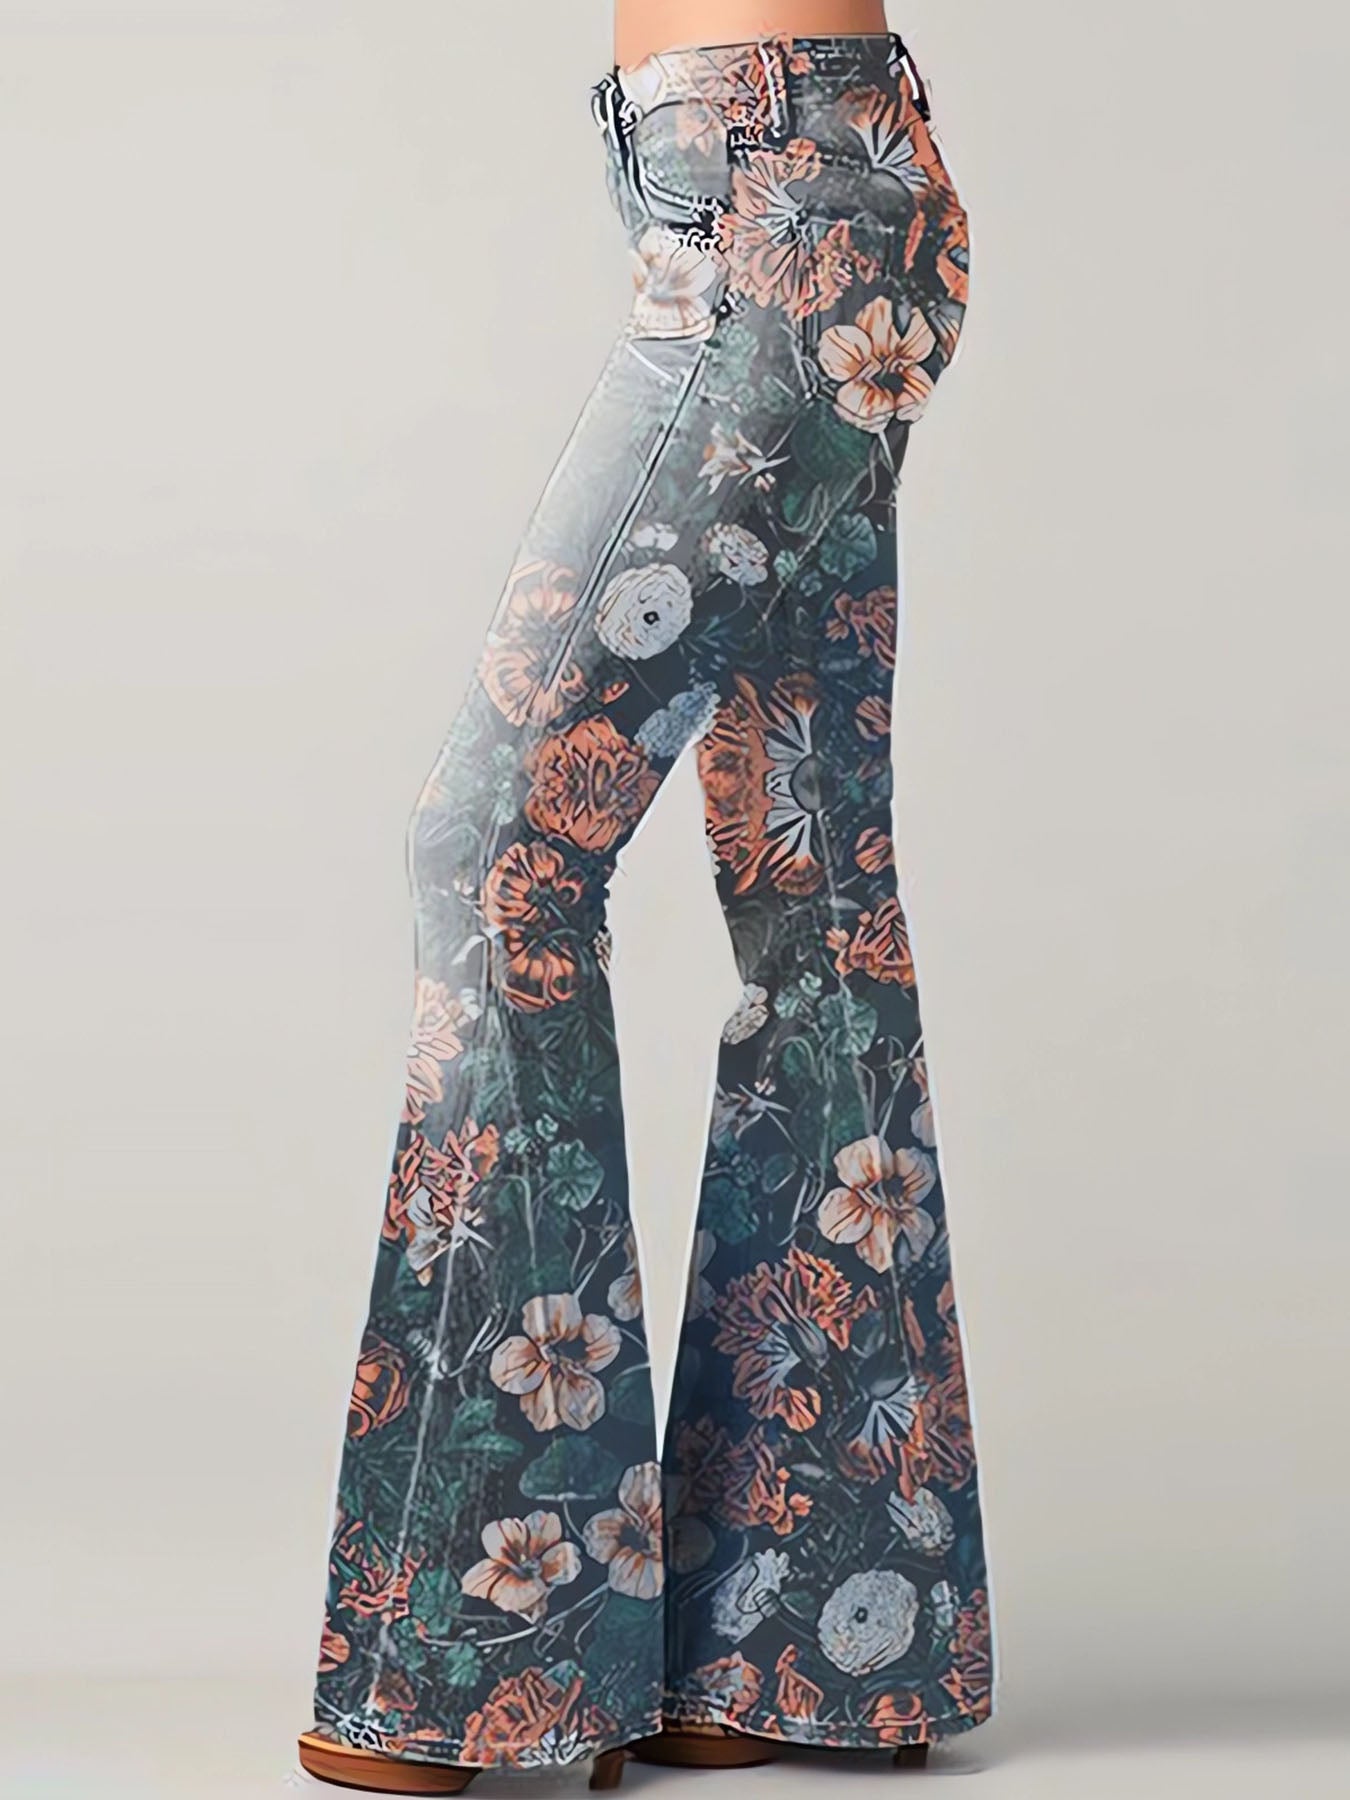 Vorioal Floral Printed Jeans